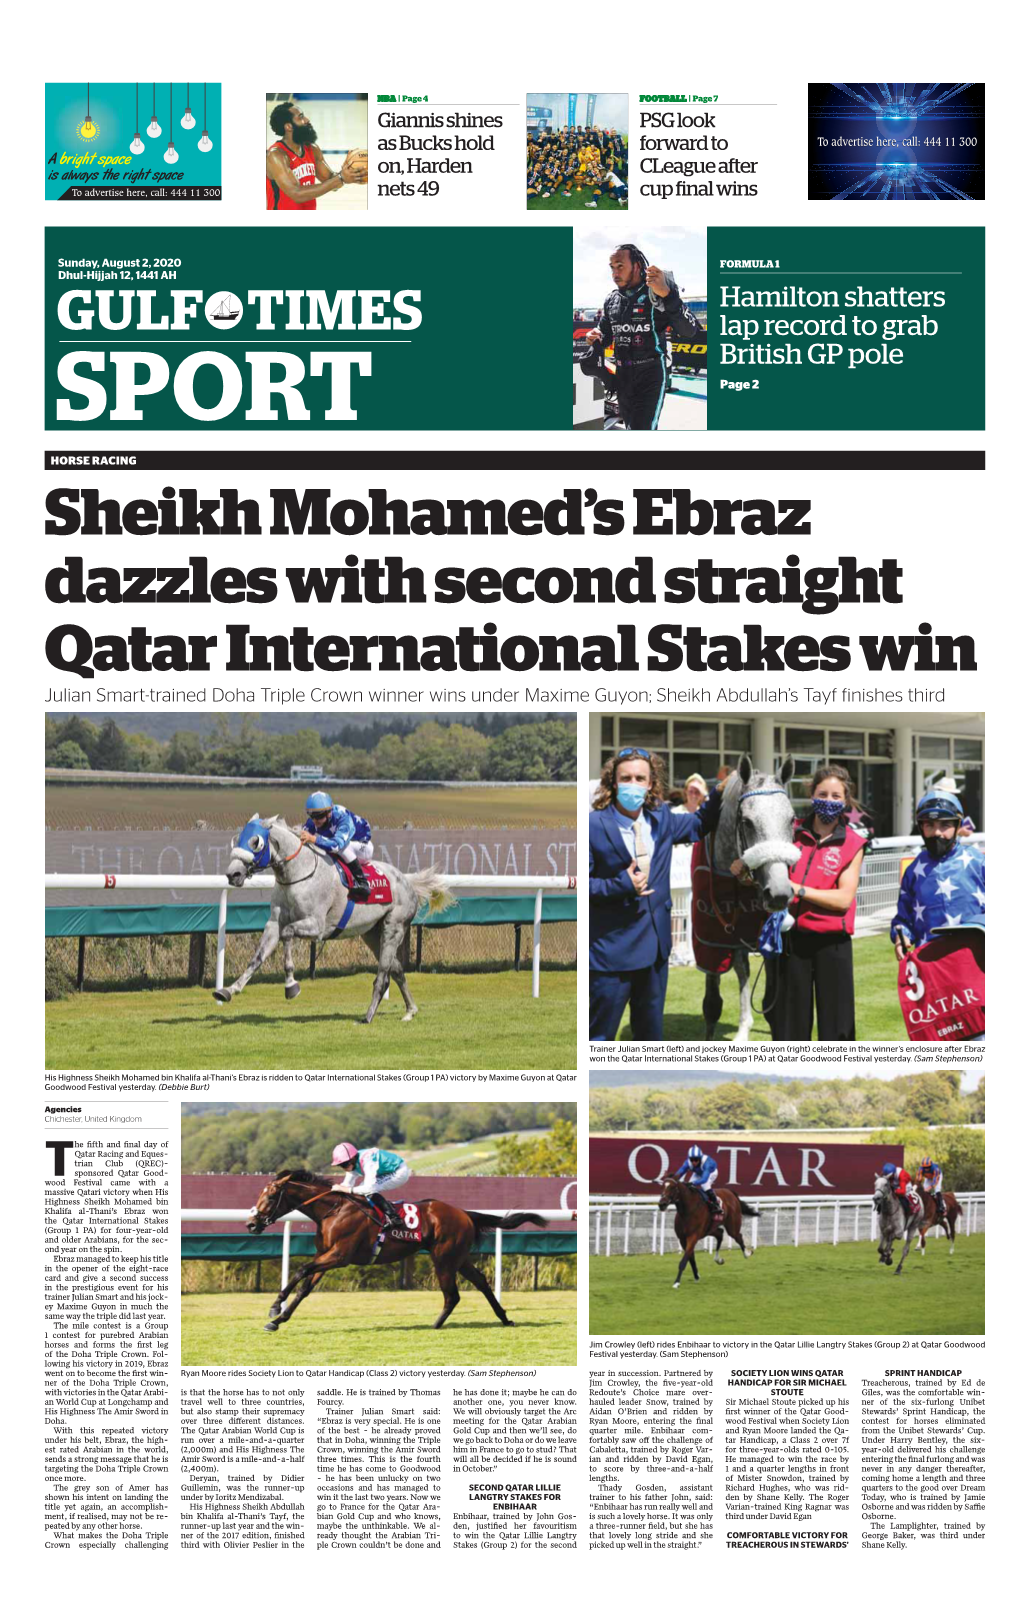 Sheikh Mohamed's Ebraz Dazzles with Second Straight Qatar International